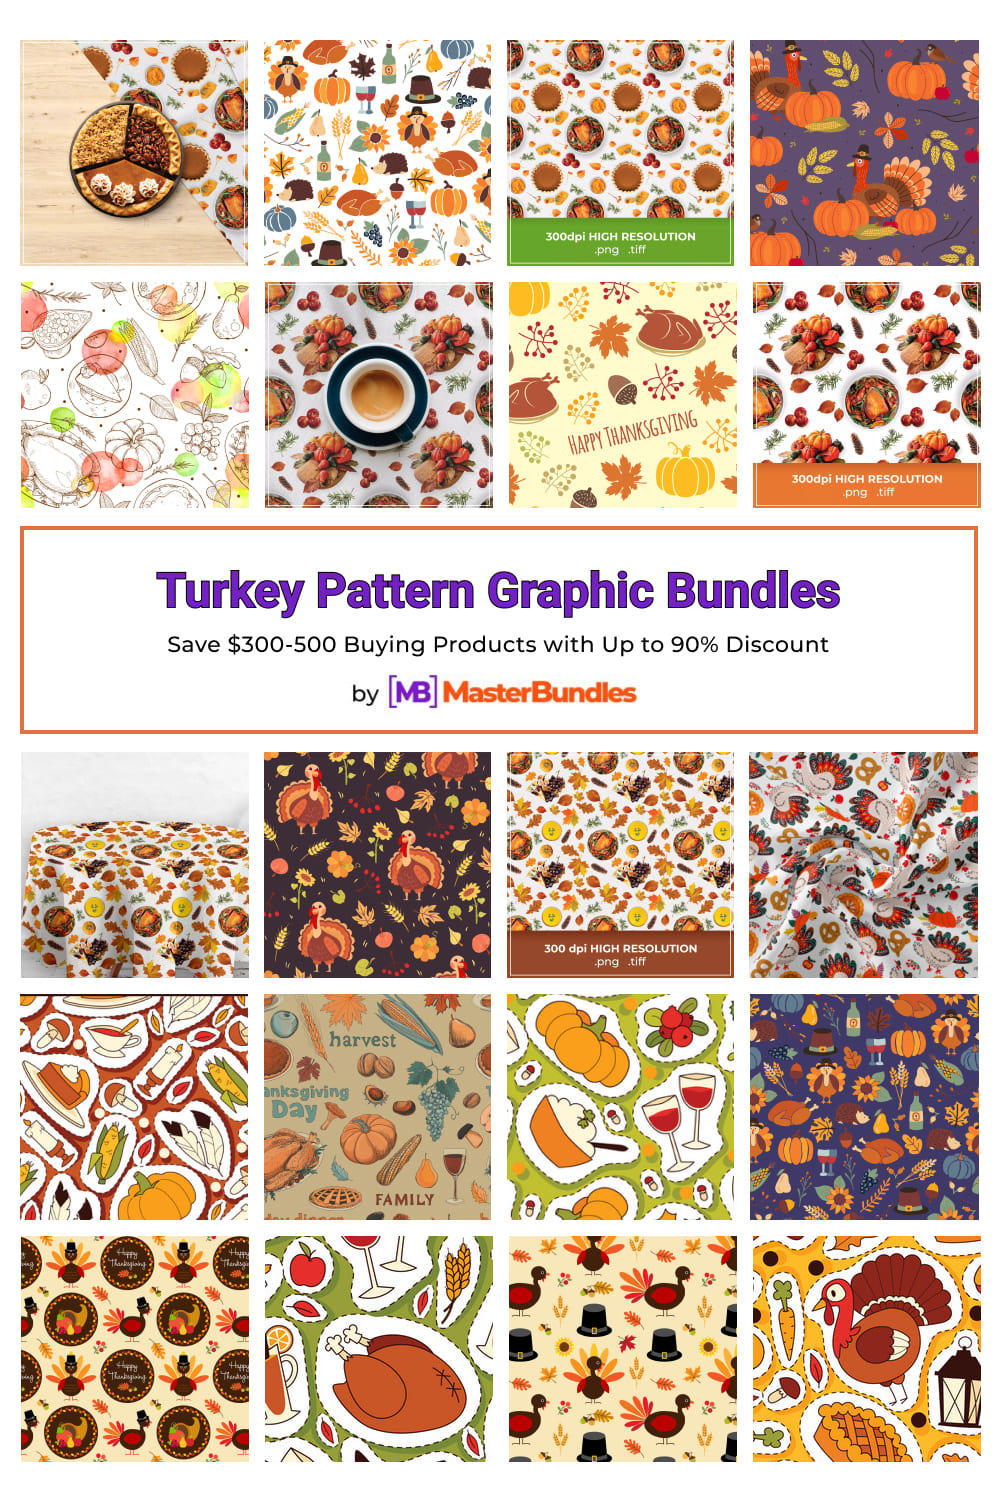 https://masterbundles.com/graphics/patterns/thanksgiving/turkey/ Turkey Pattern Graphic Bundles for Pinterest.